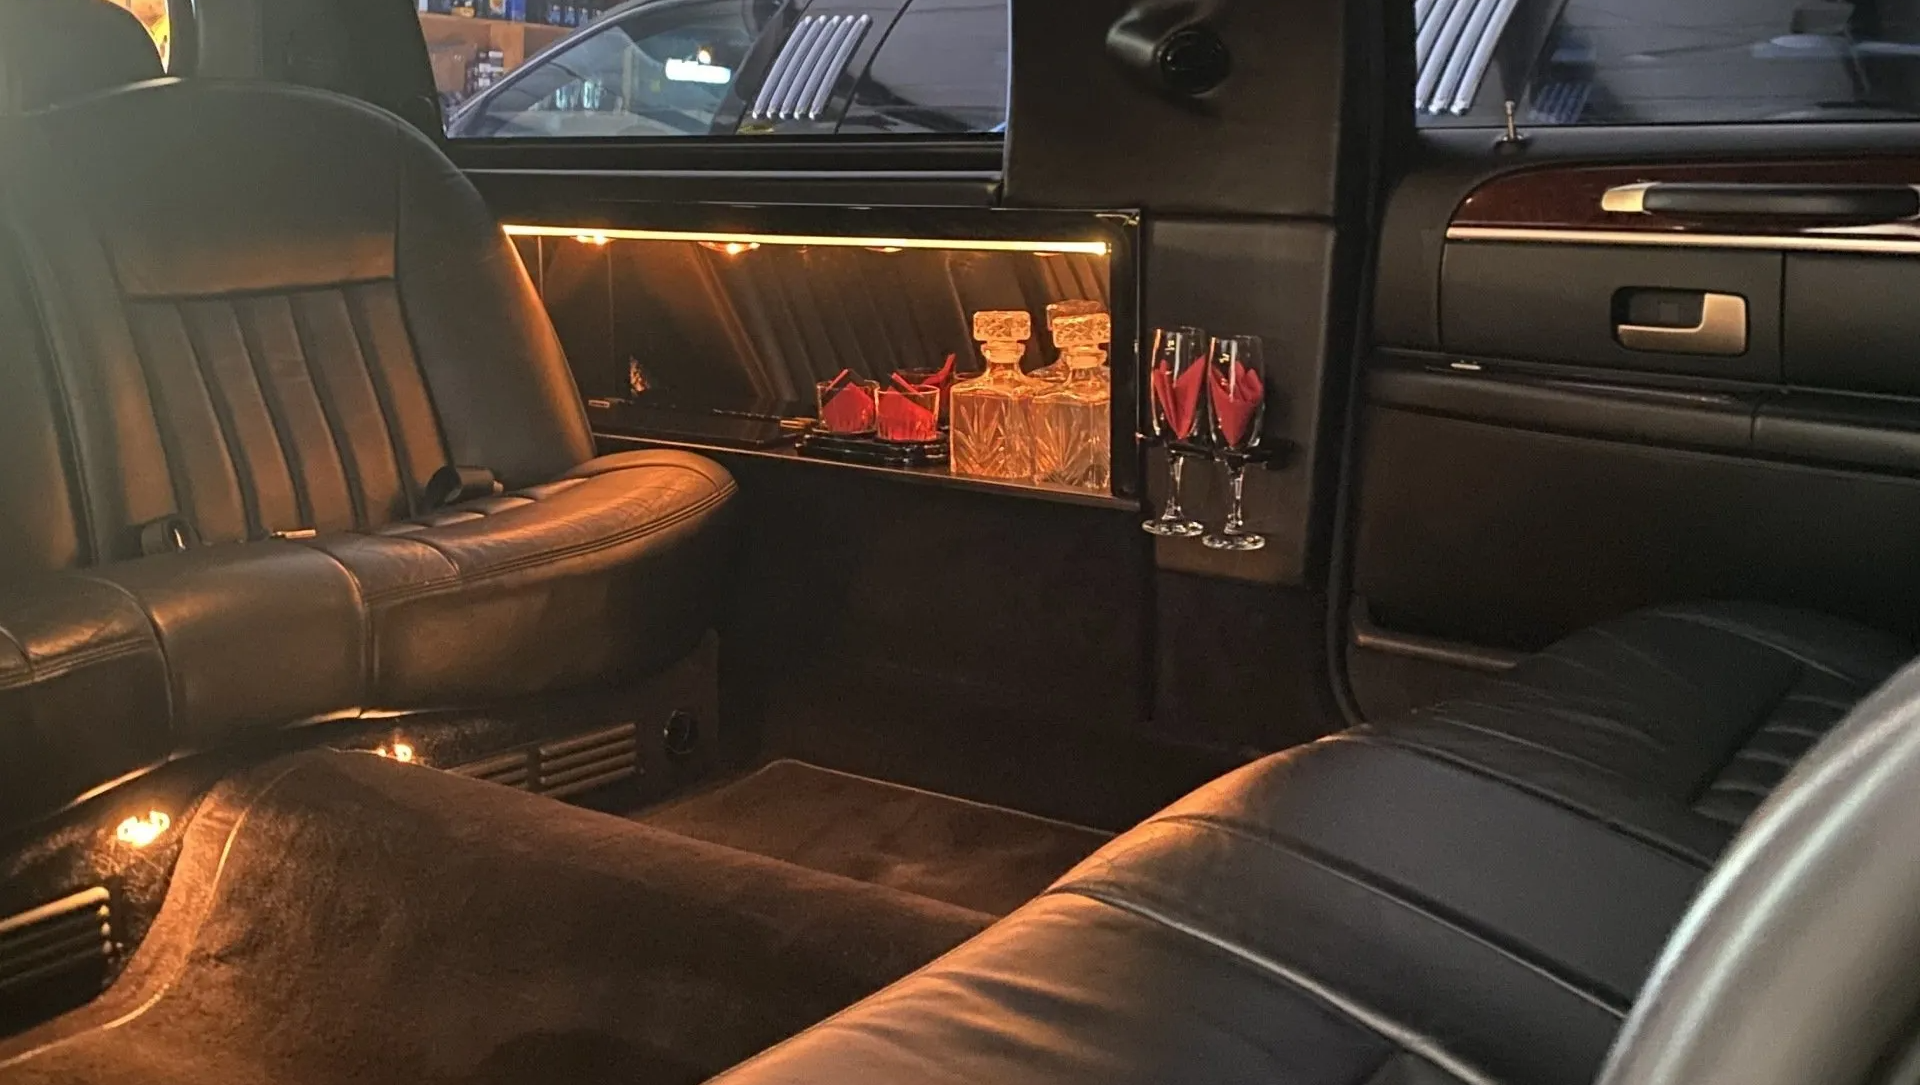 10 passenger limousine interior- East Bridgewater MA Extreme Limousine